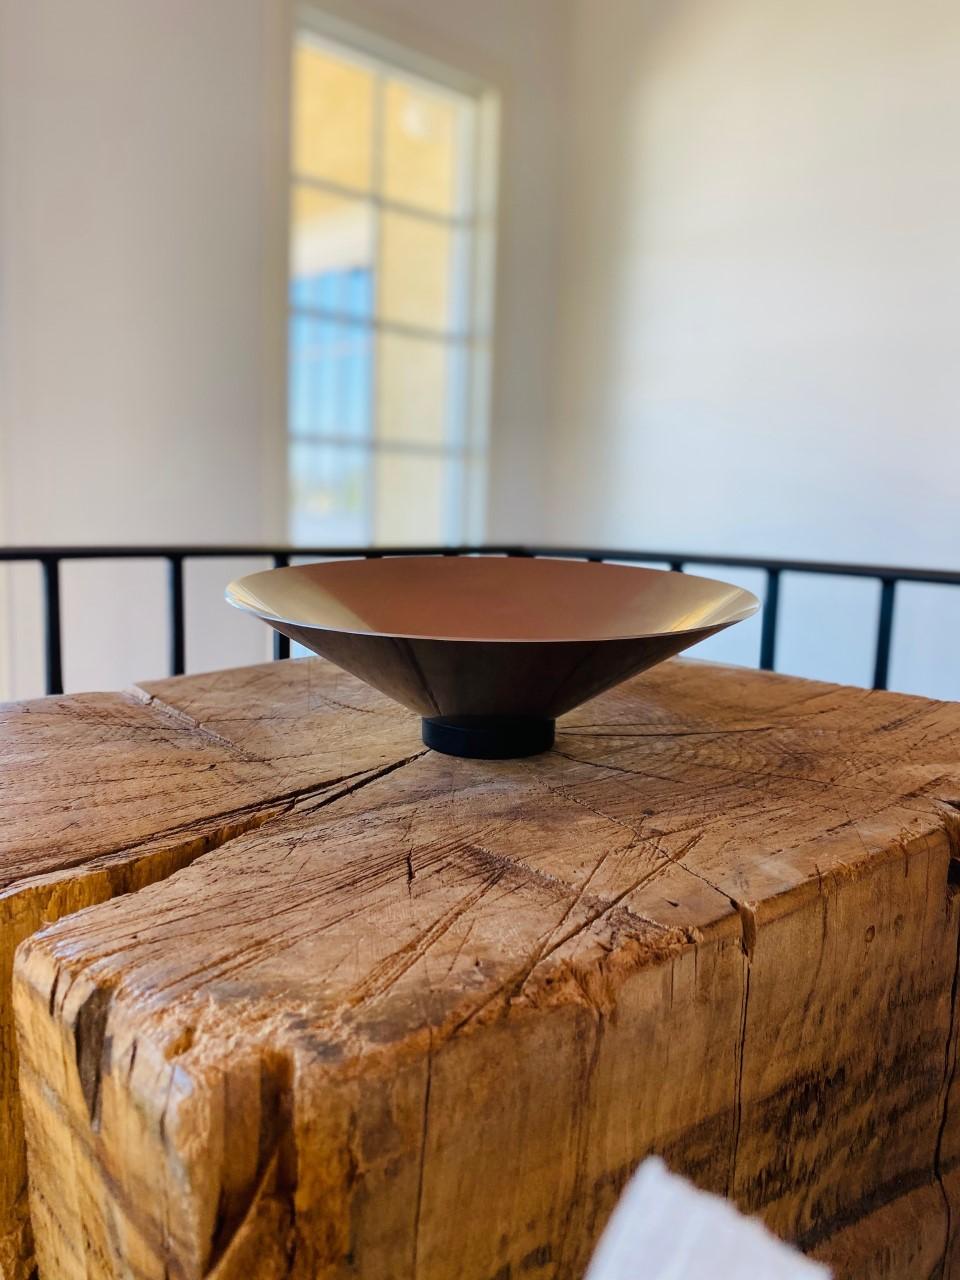 Vintage Stainless Steel “Complet” Bowl by Jørgen Møller for Royal Copenhagen In Good Condition For Sale In San Diego, CA